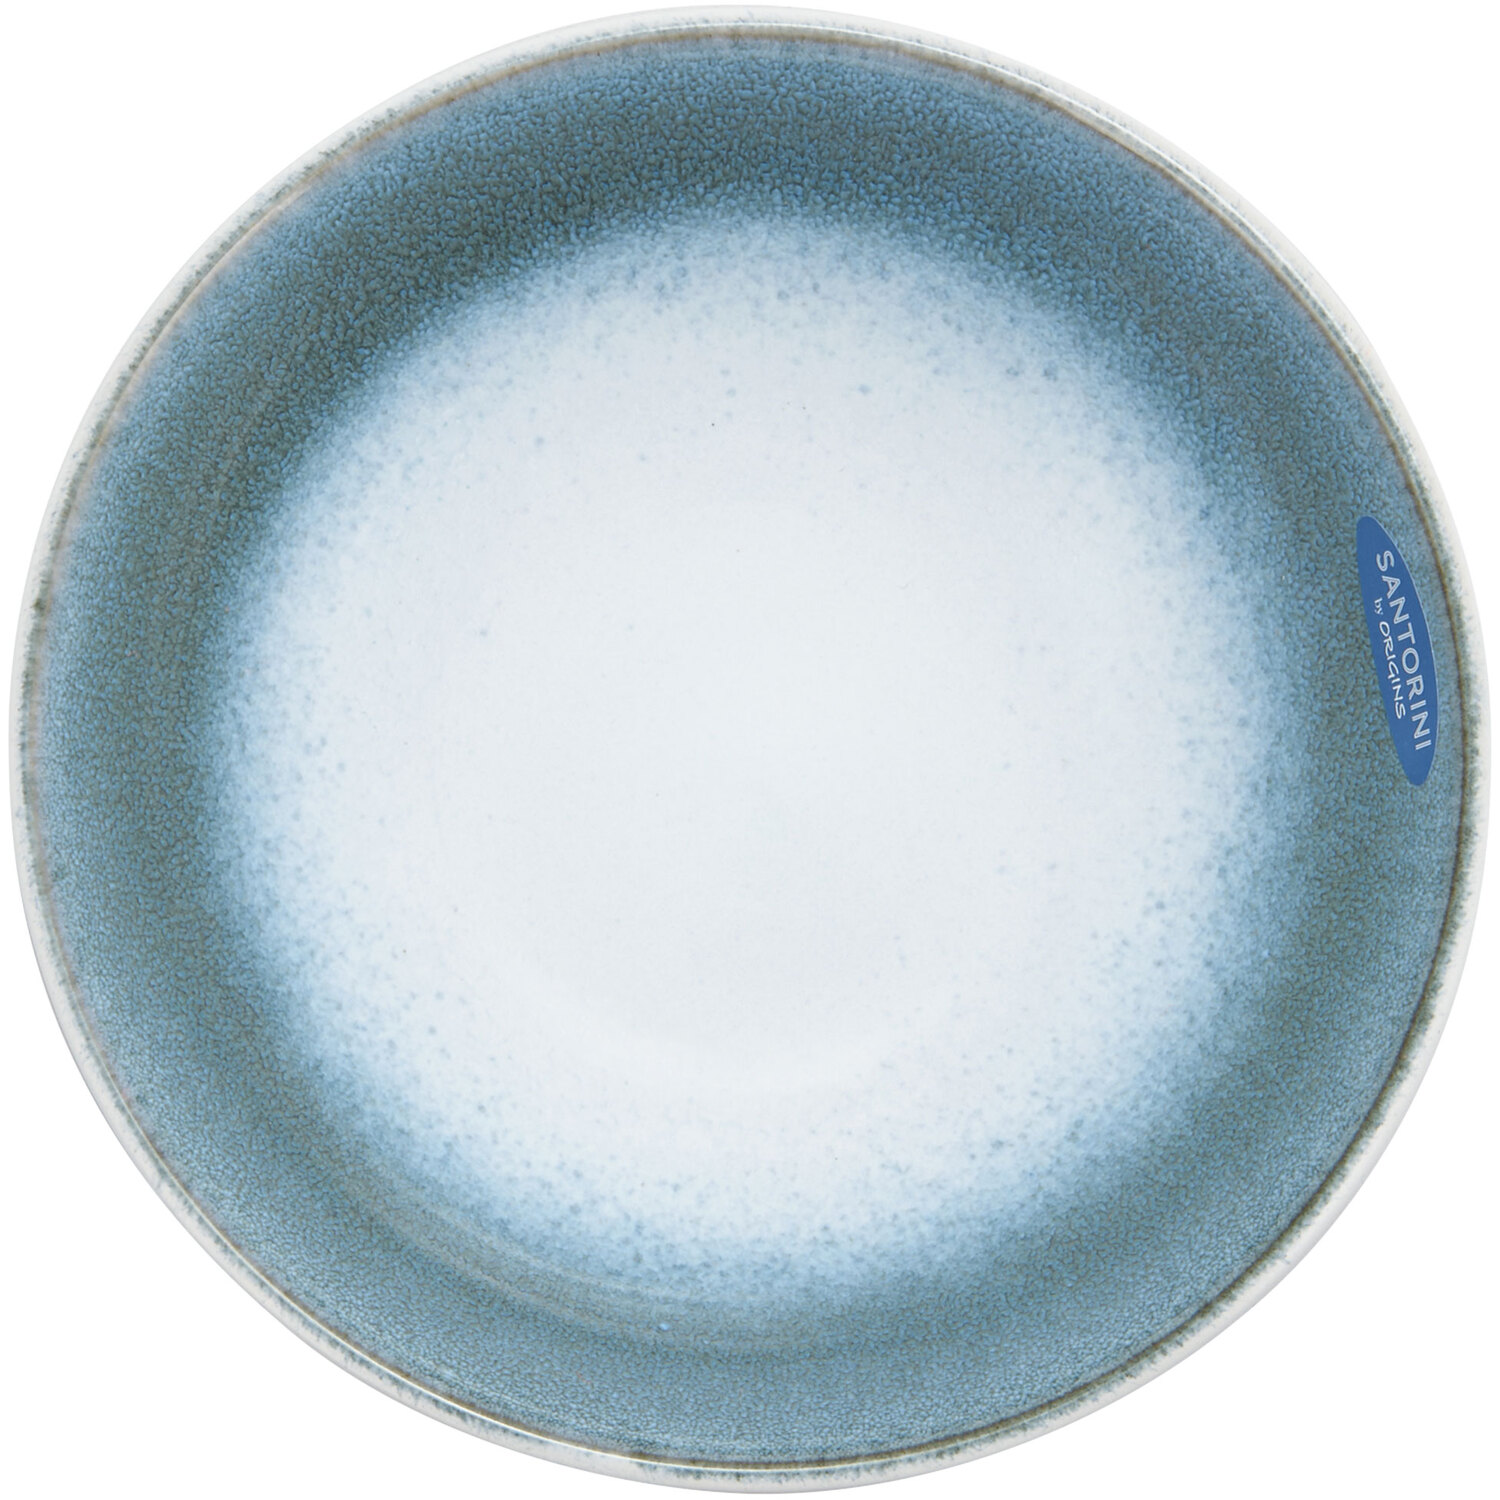 Santorini Reactive Glaze Pasta Bowl - Blue Image 2